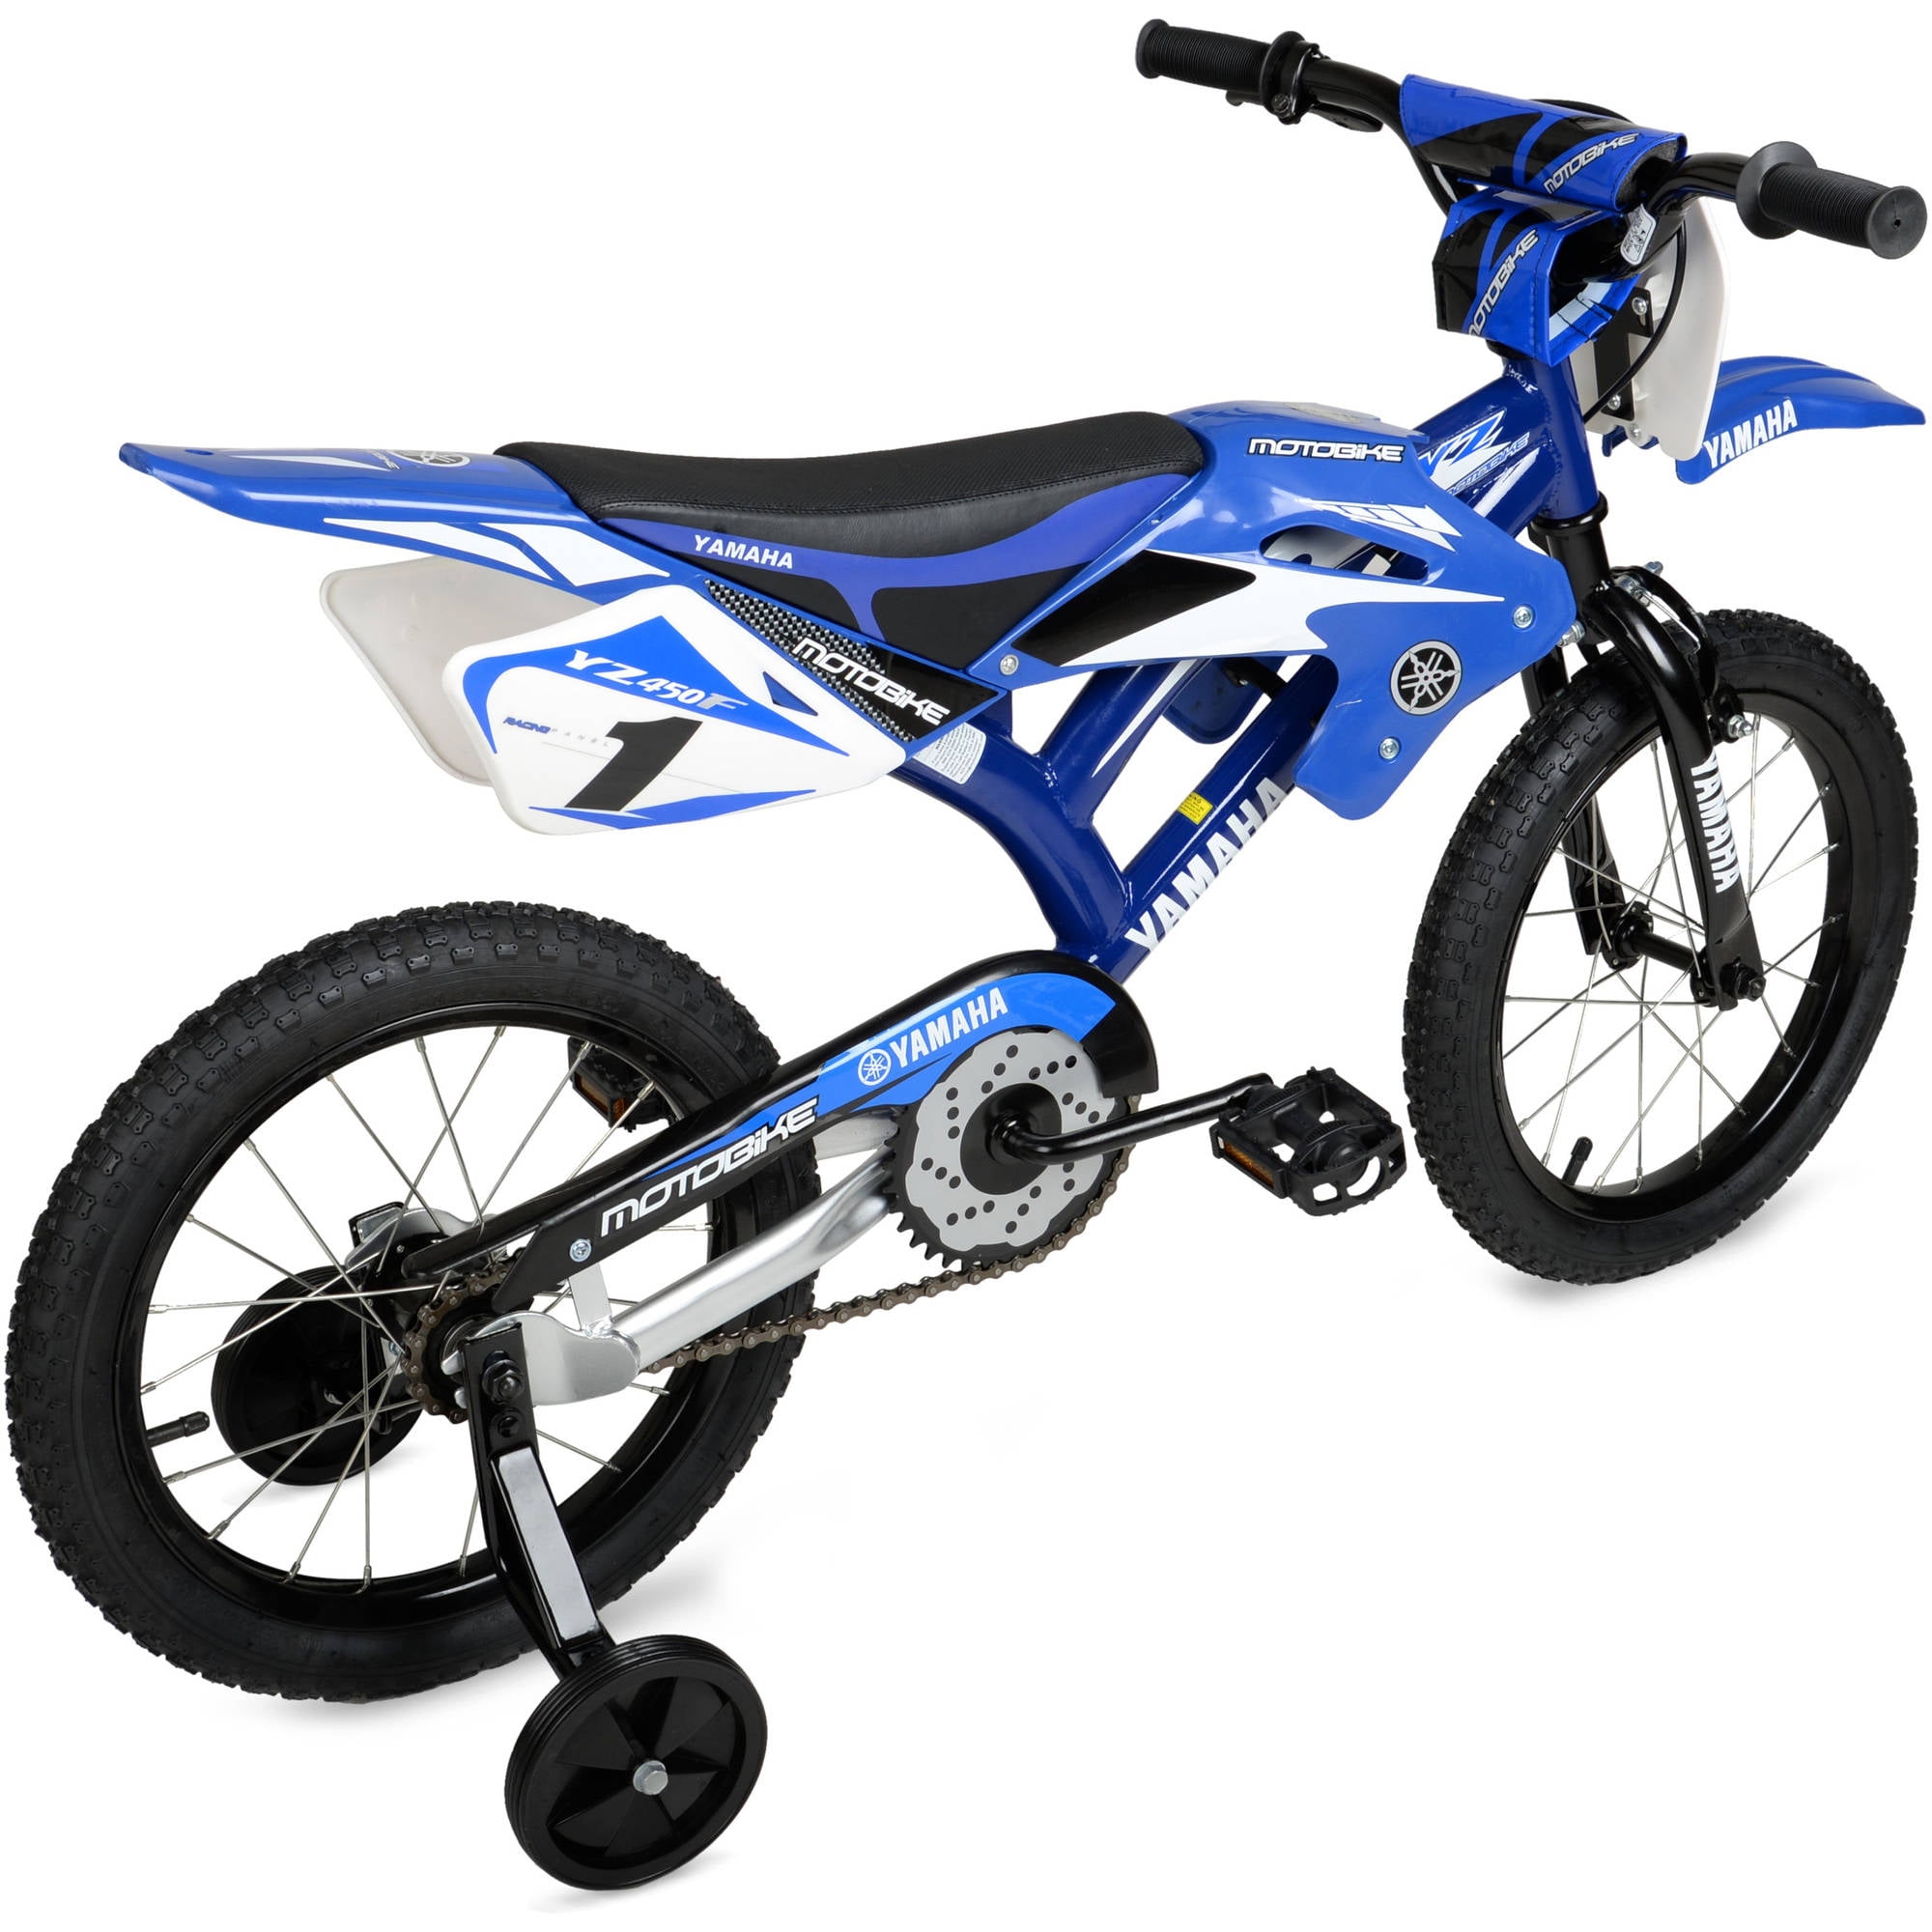 16" Moto Yamaha Boys BMX Bike Blue Steel Frame Kids Bicycle Motocross Style New 